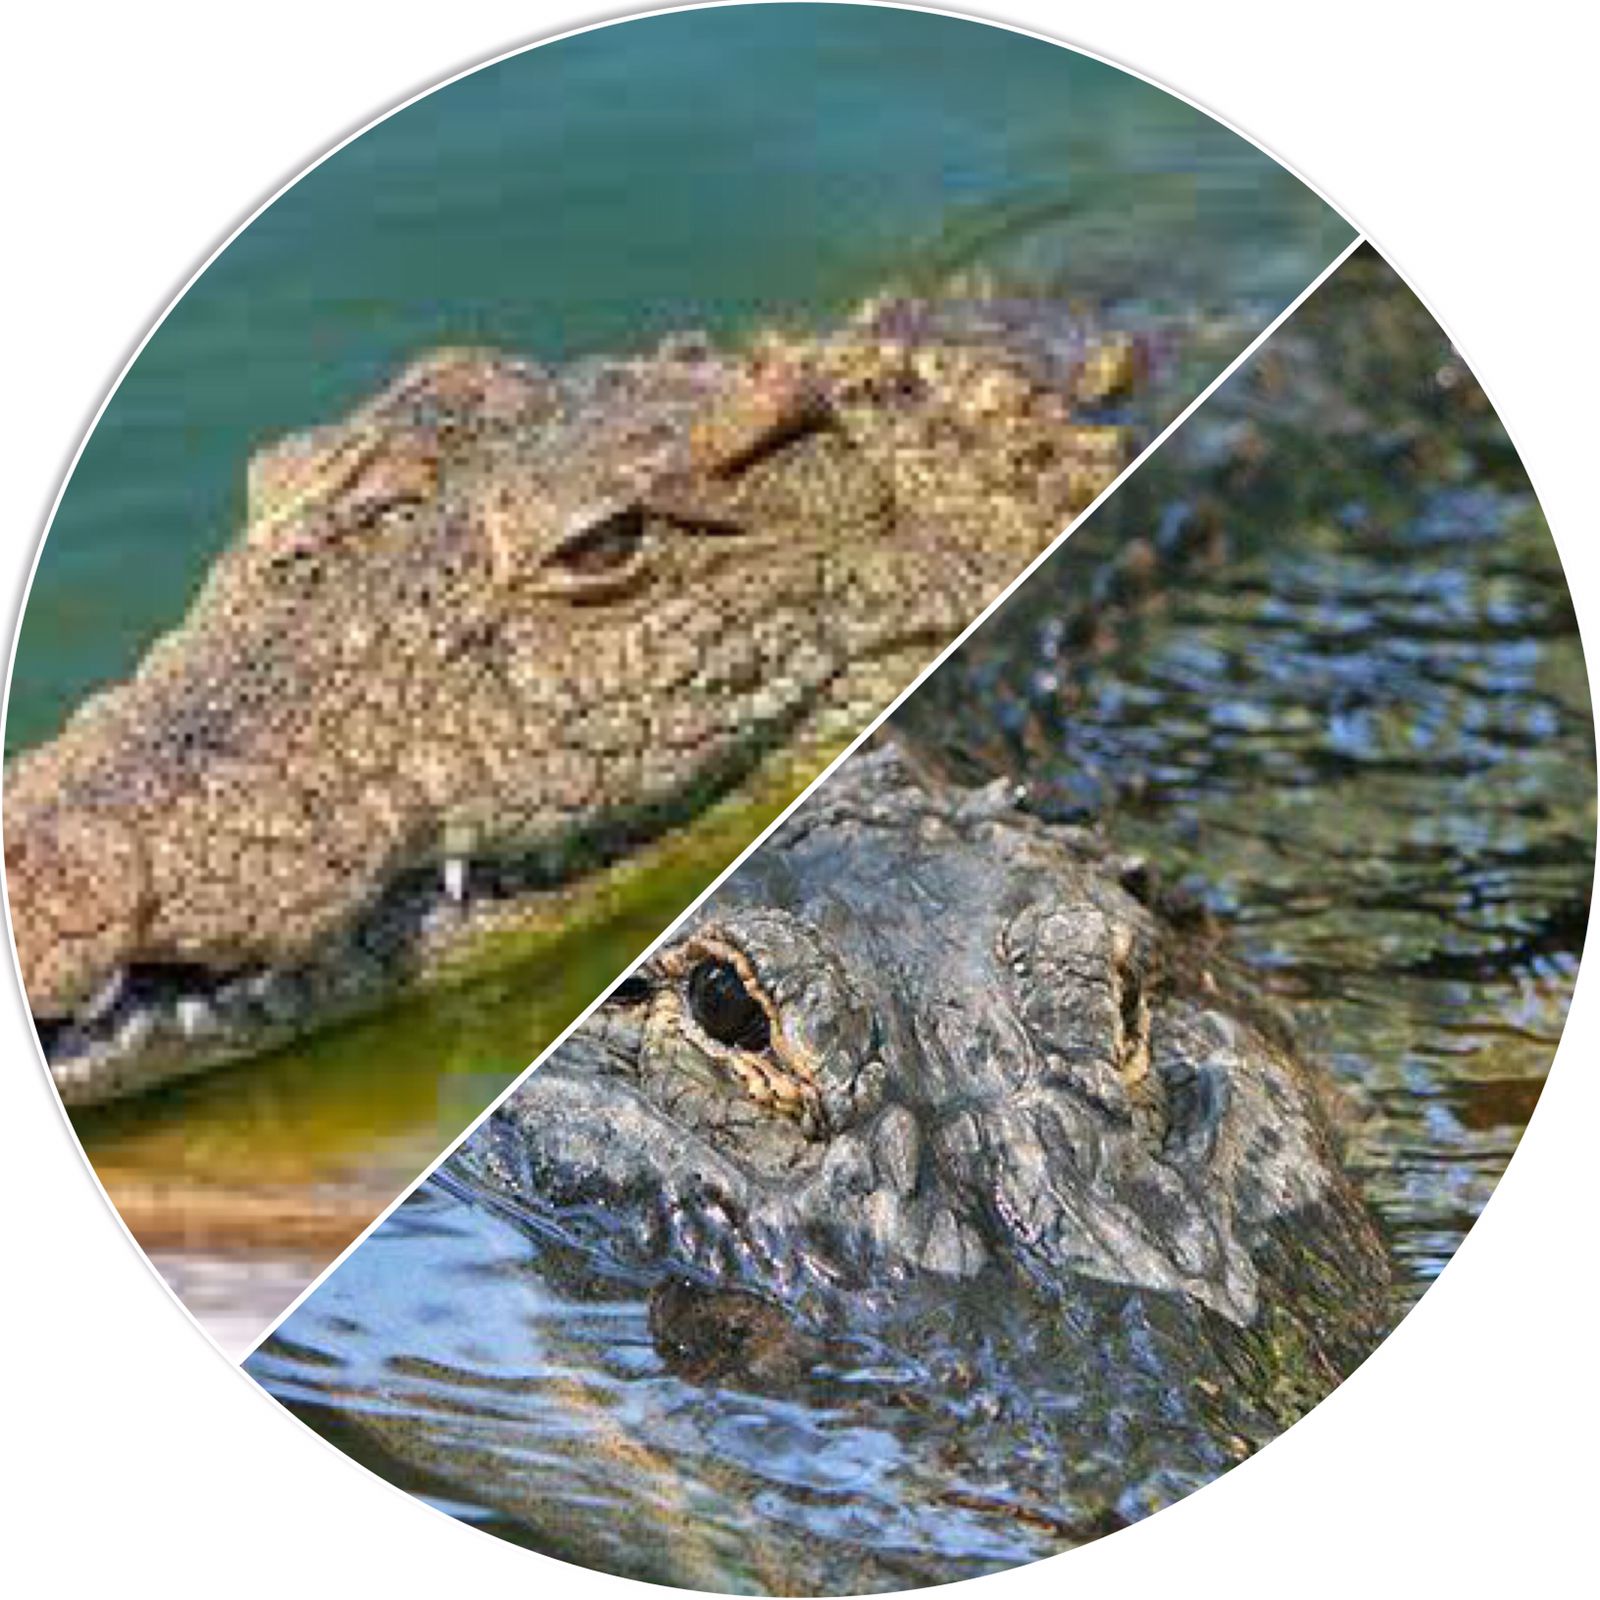 Behaviors of crocodile and alligators